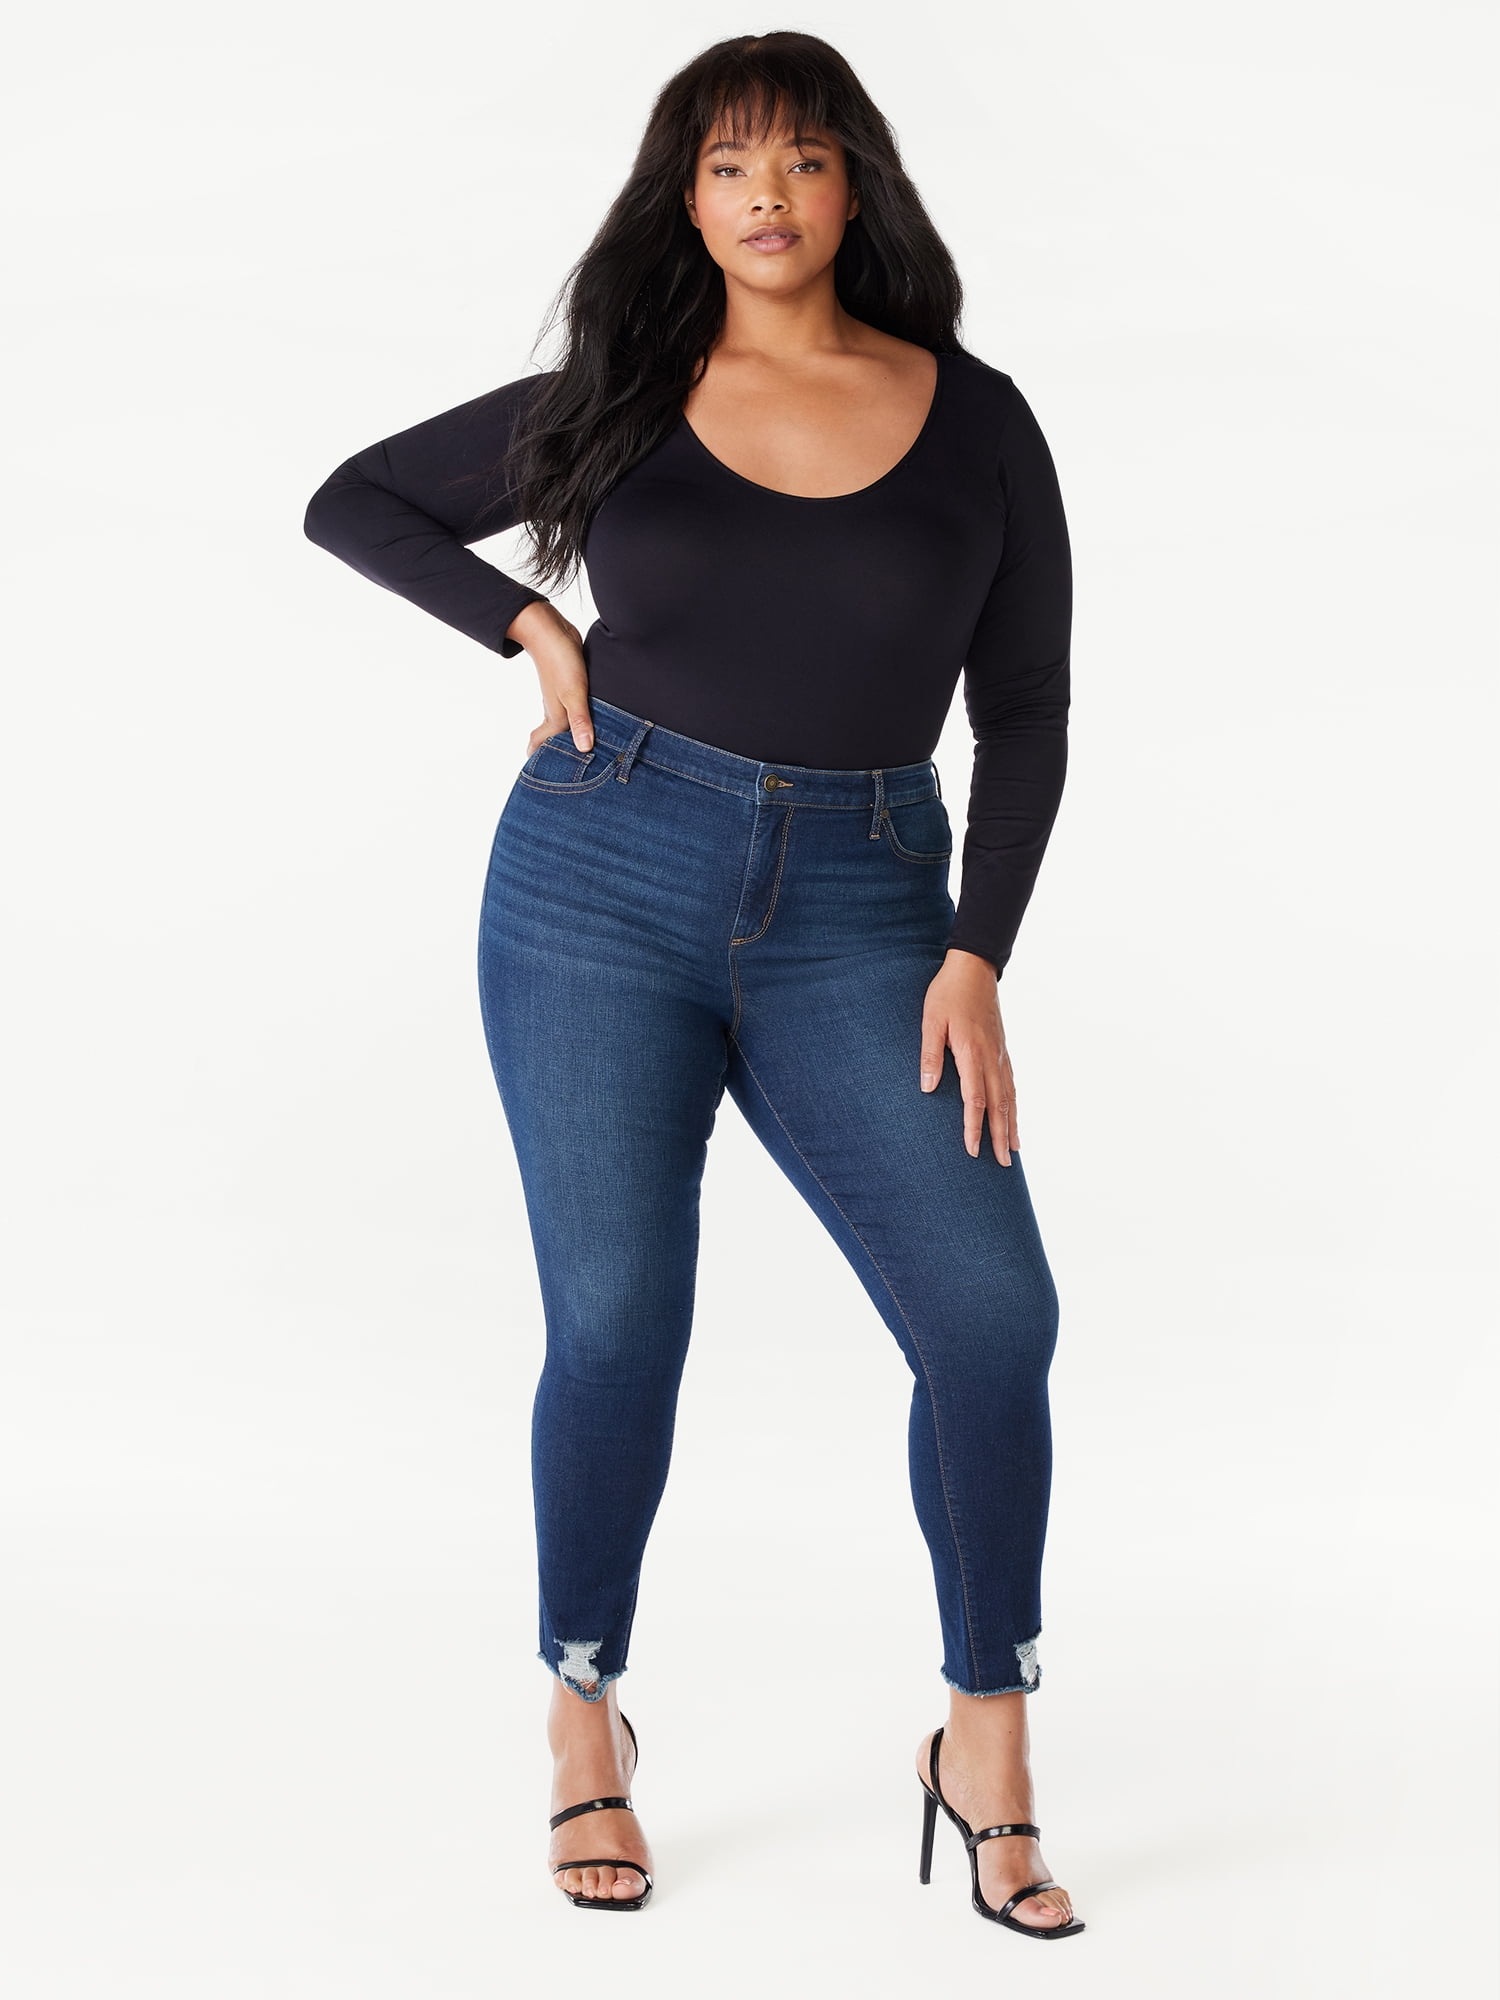 Sofia Jeans Women's Plus Size Luisa Curvy High Rise Wide Leg Crop Jeans 